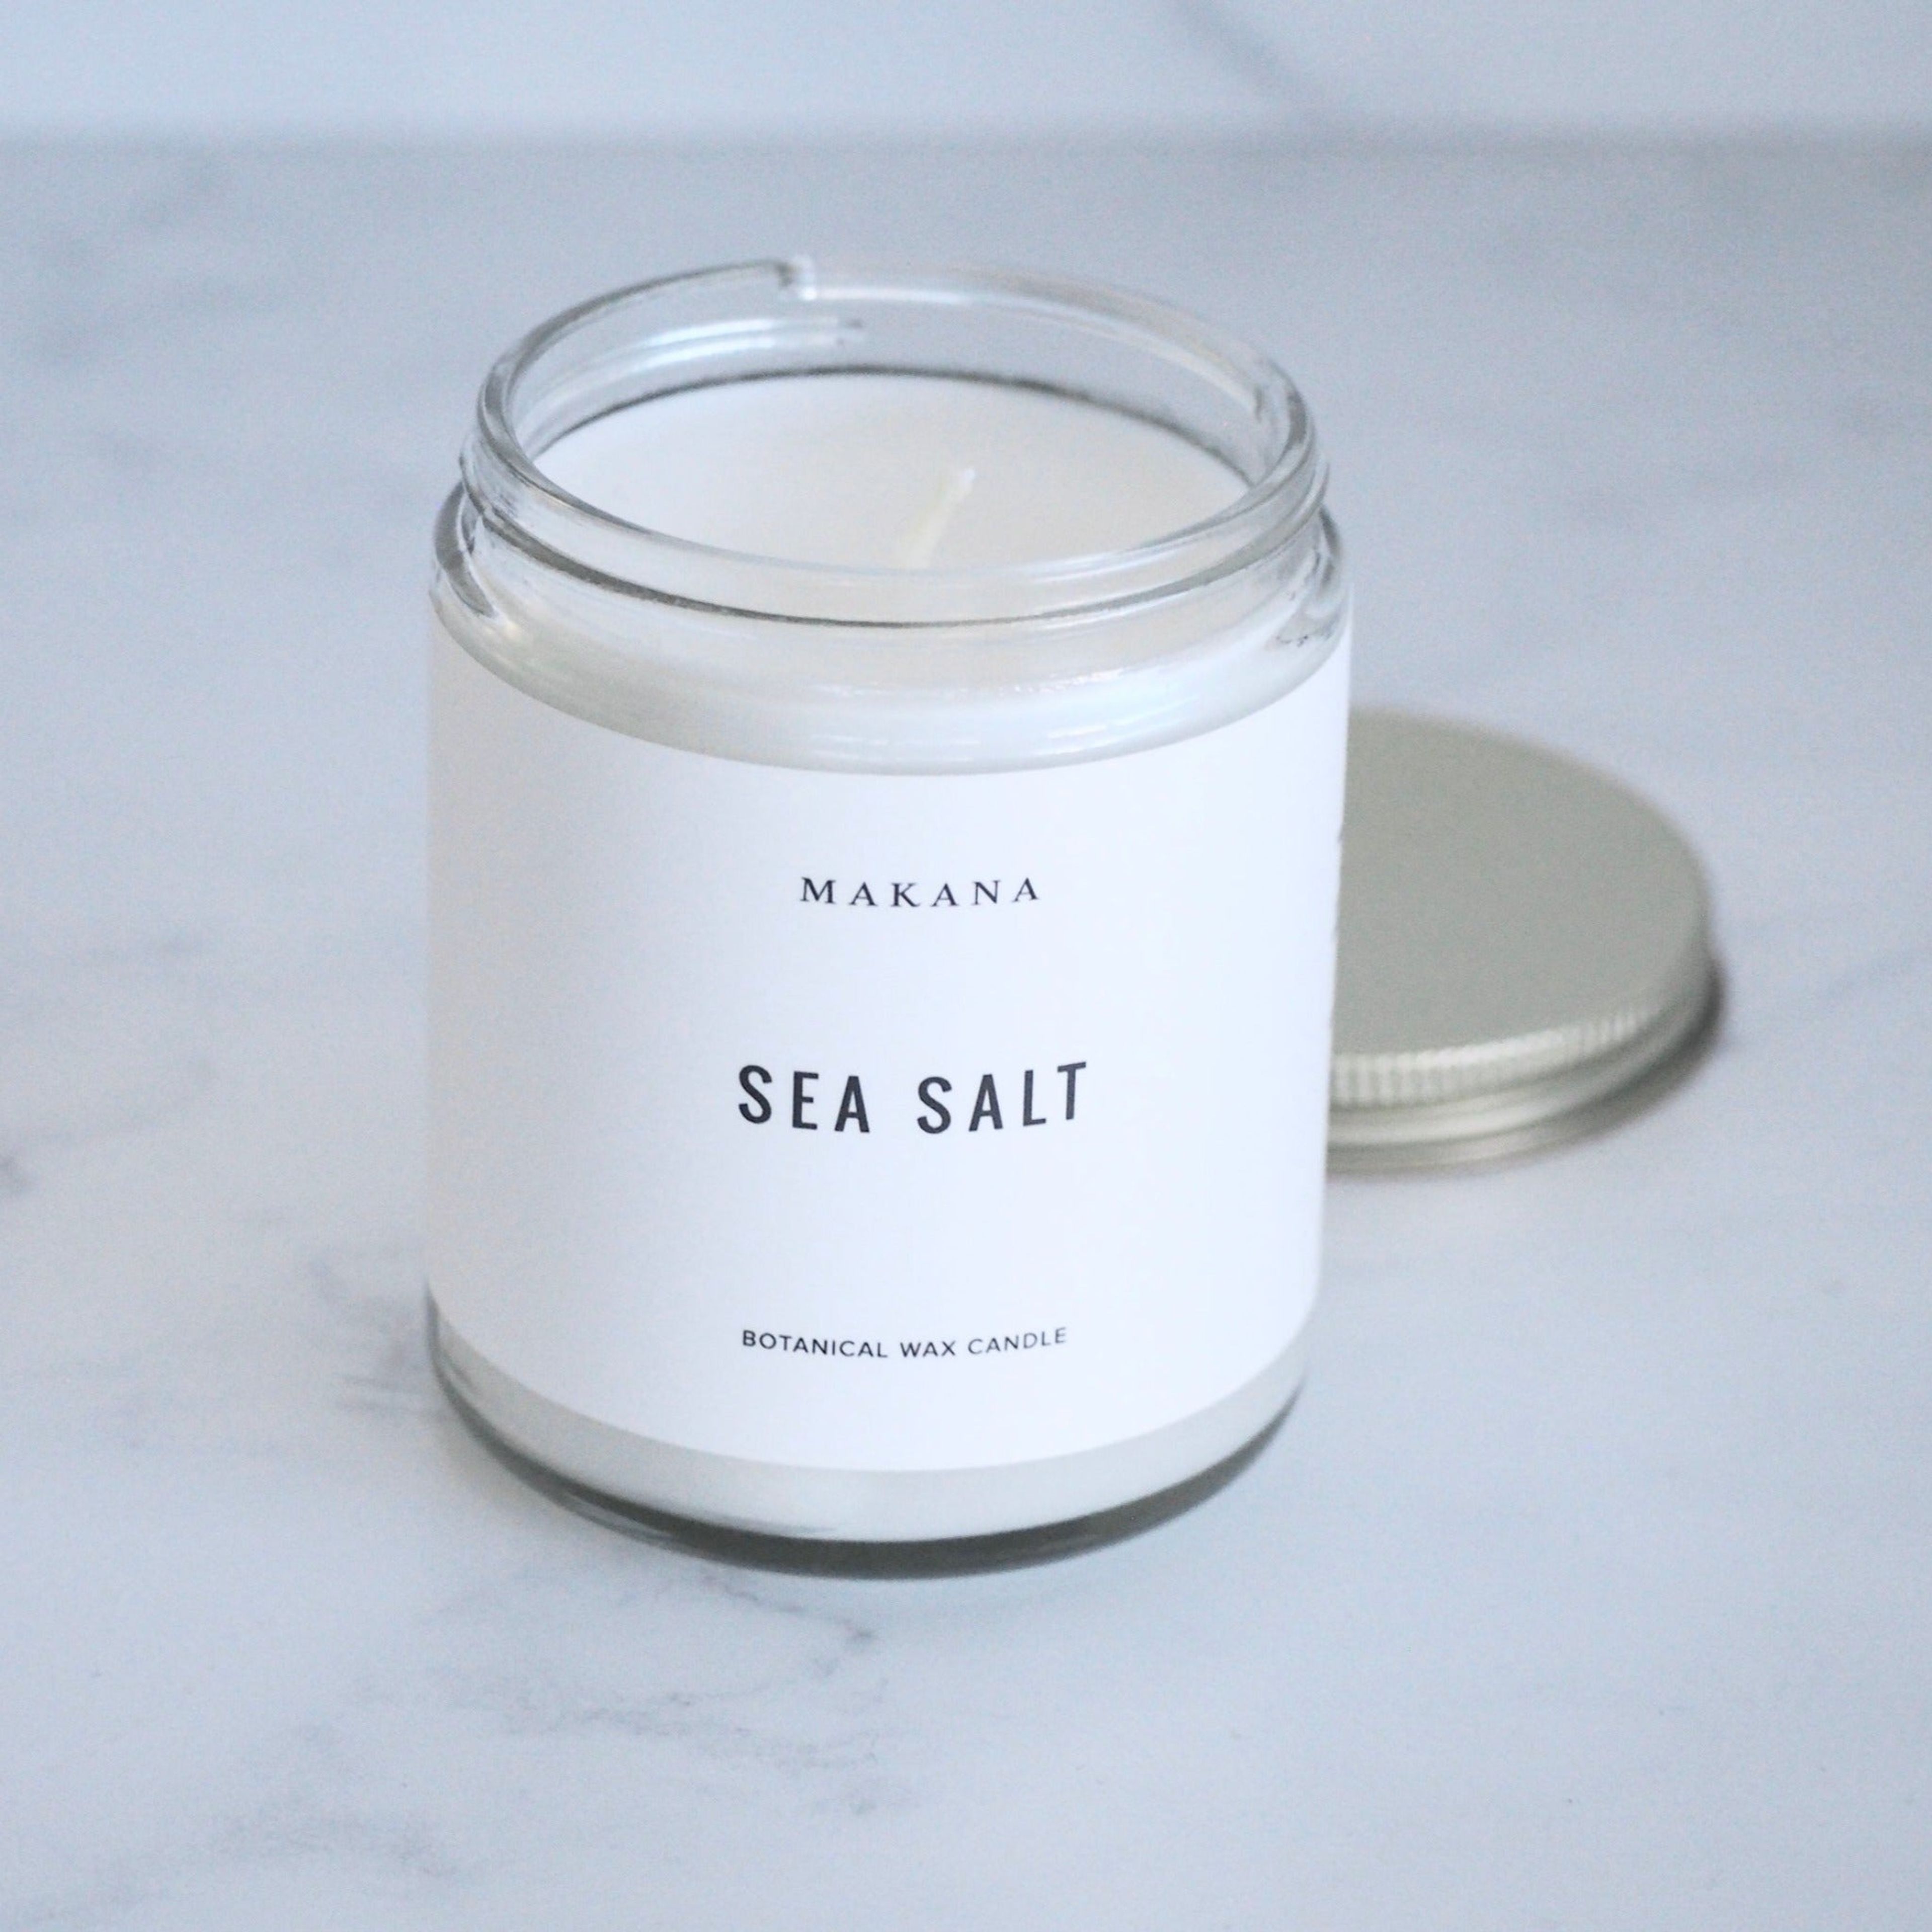 Sea Salt - Modern Apothecary Jar Candle